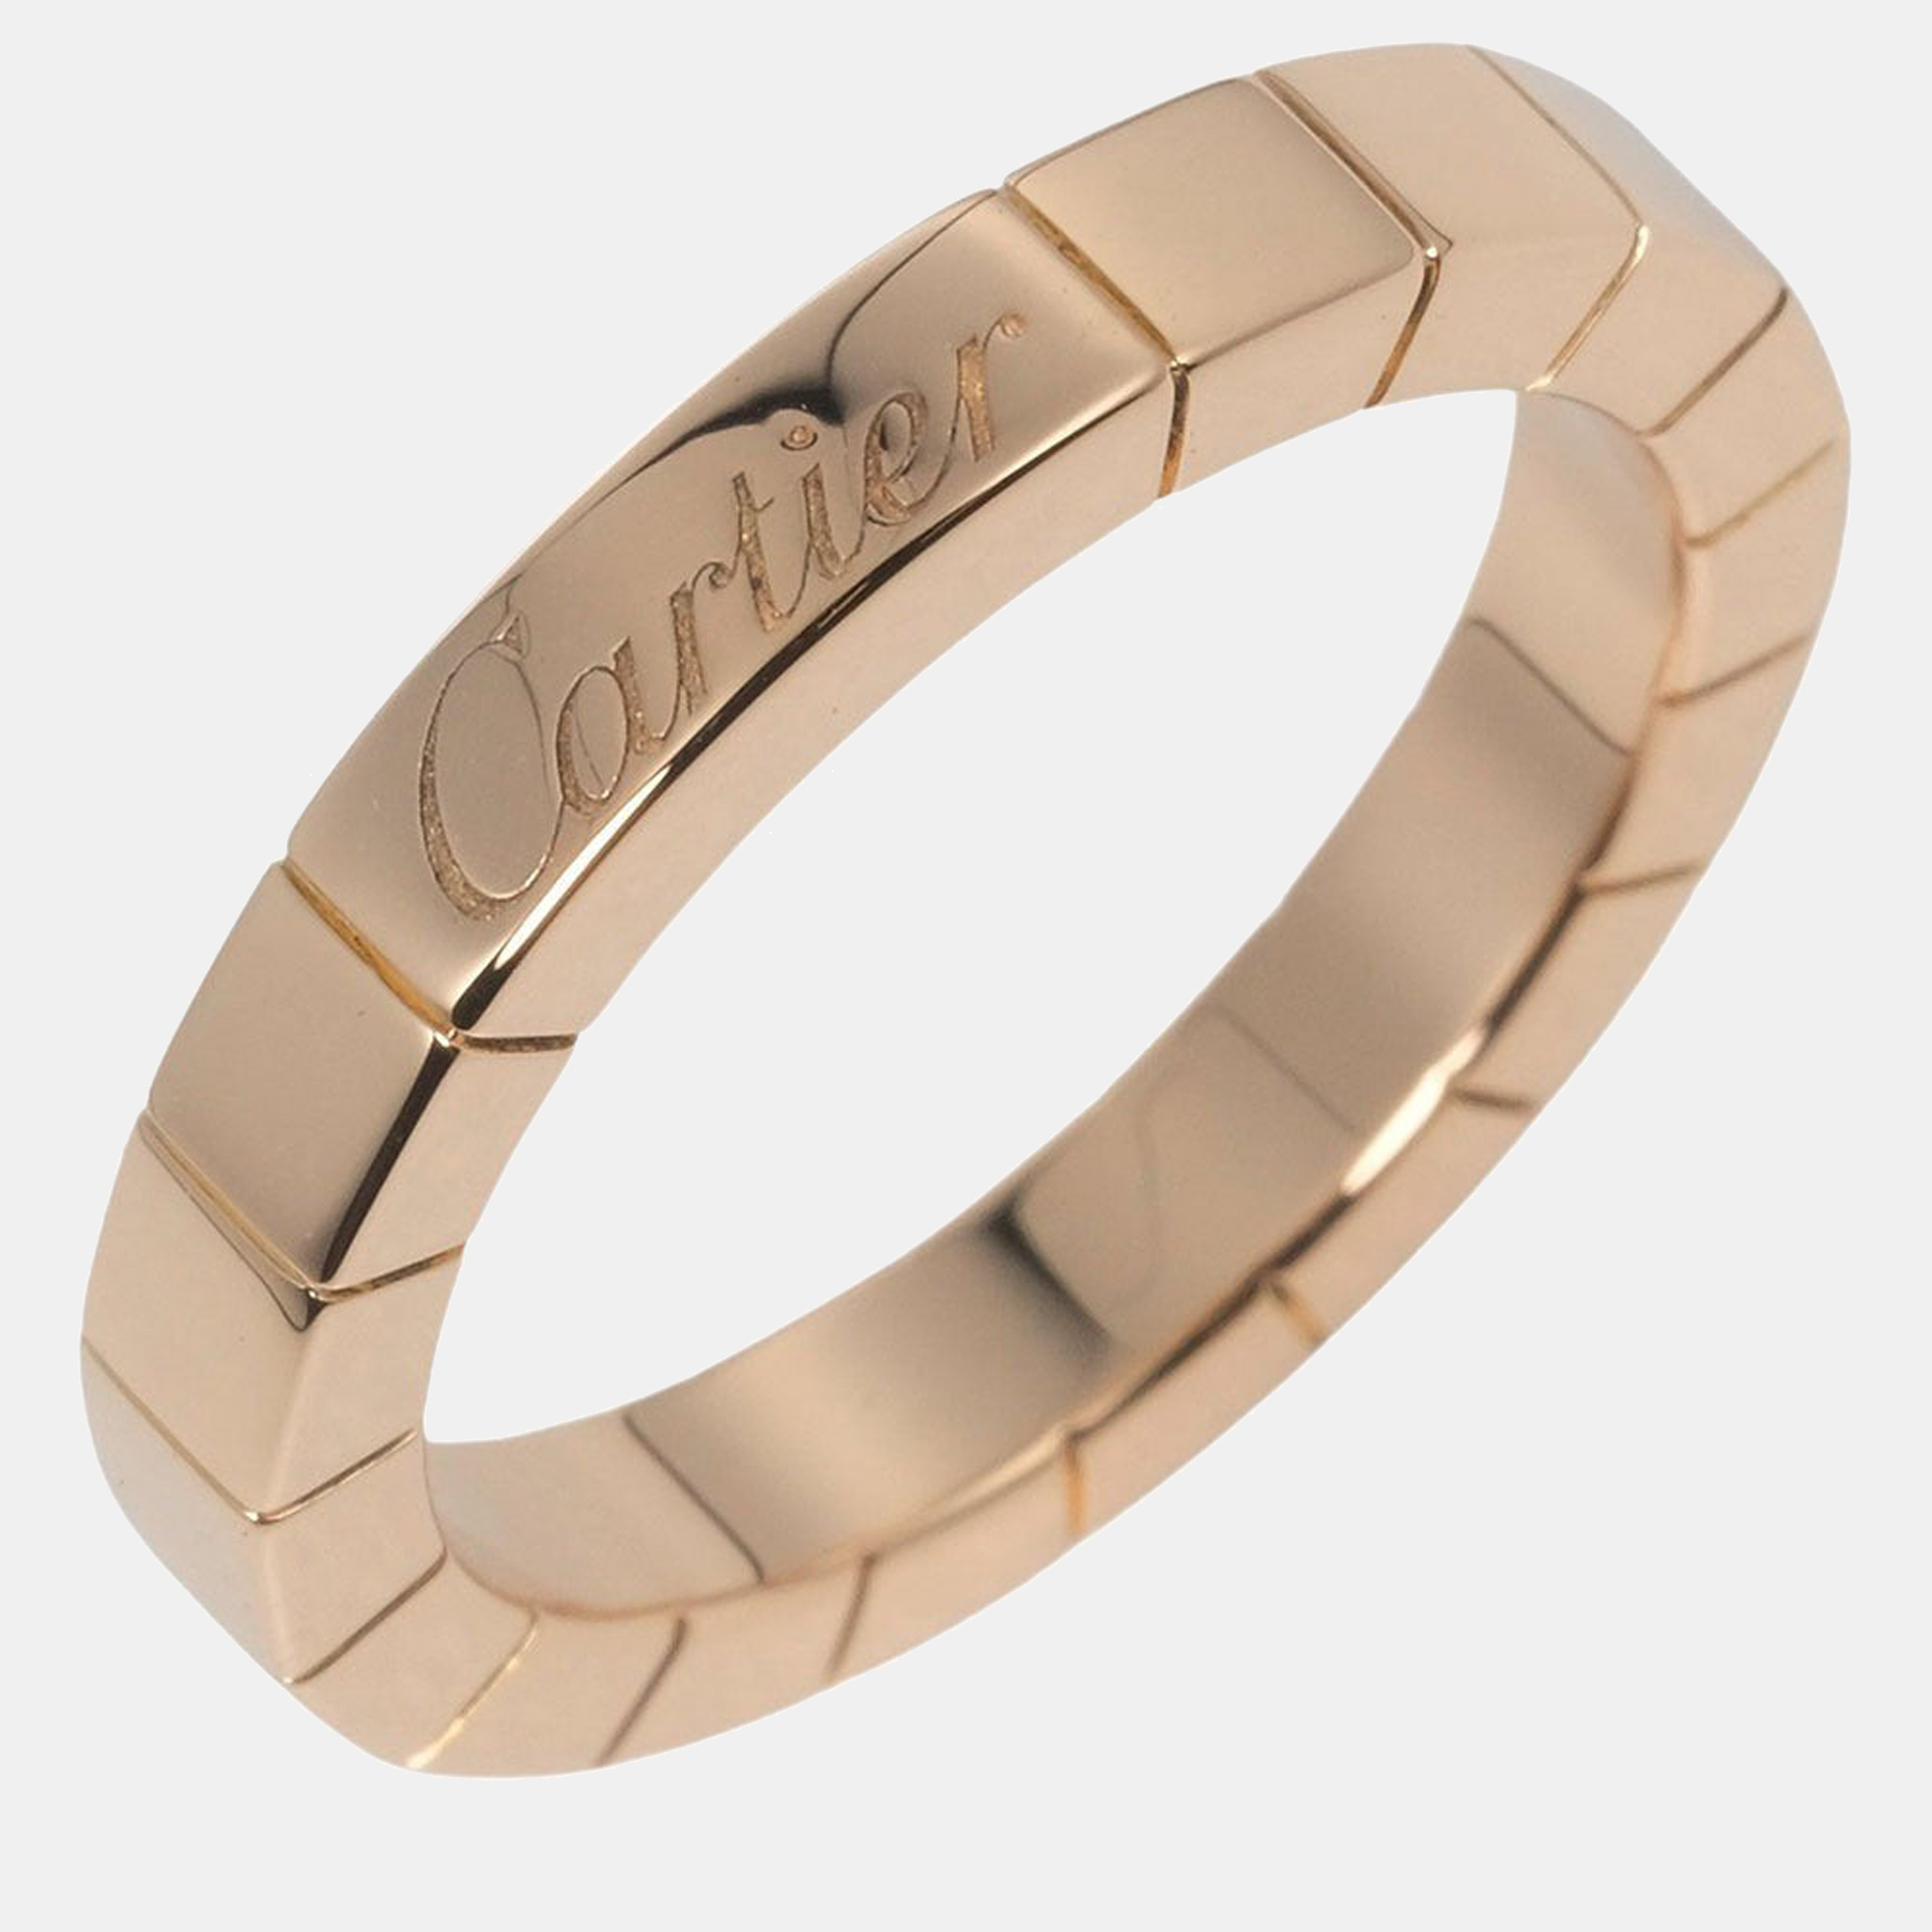 Cartier Lanieres 18K Rose Gold Ring EU 48